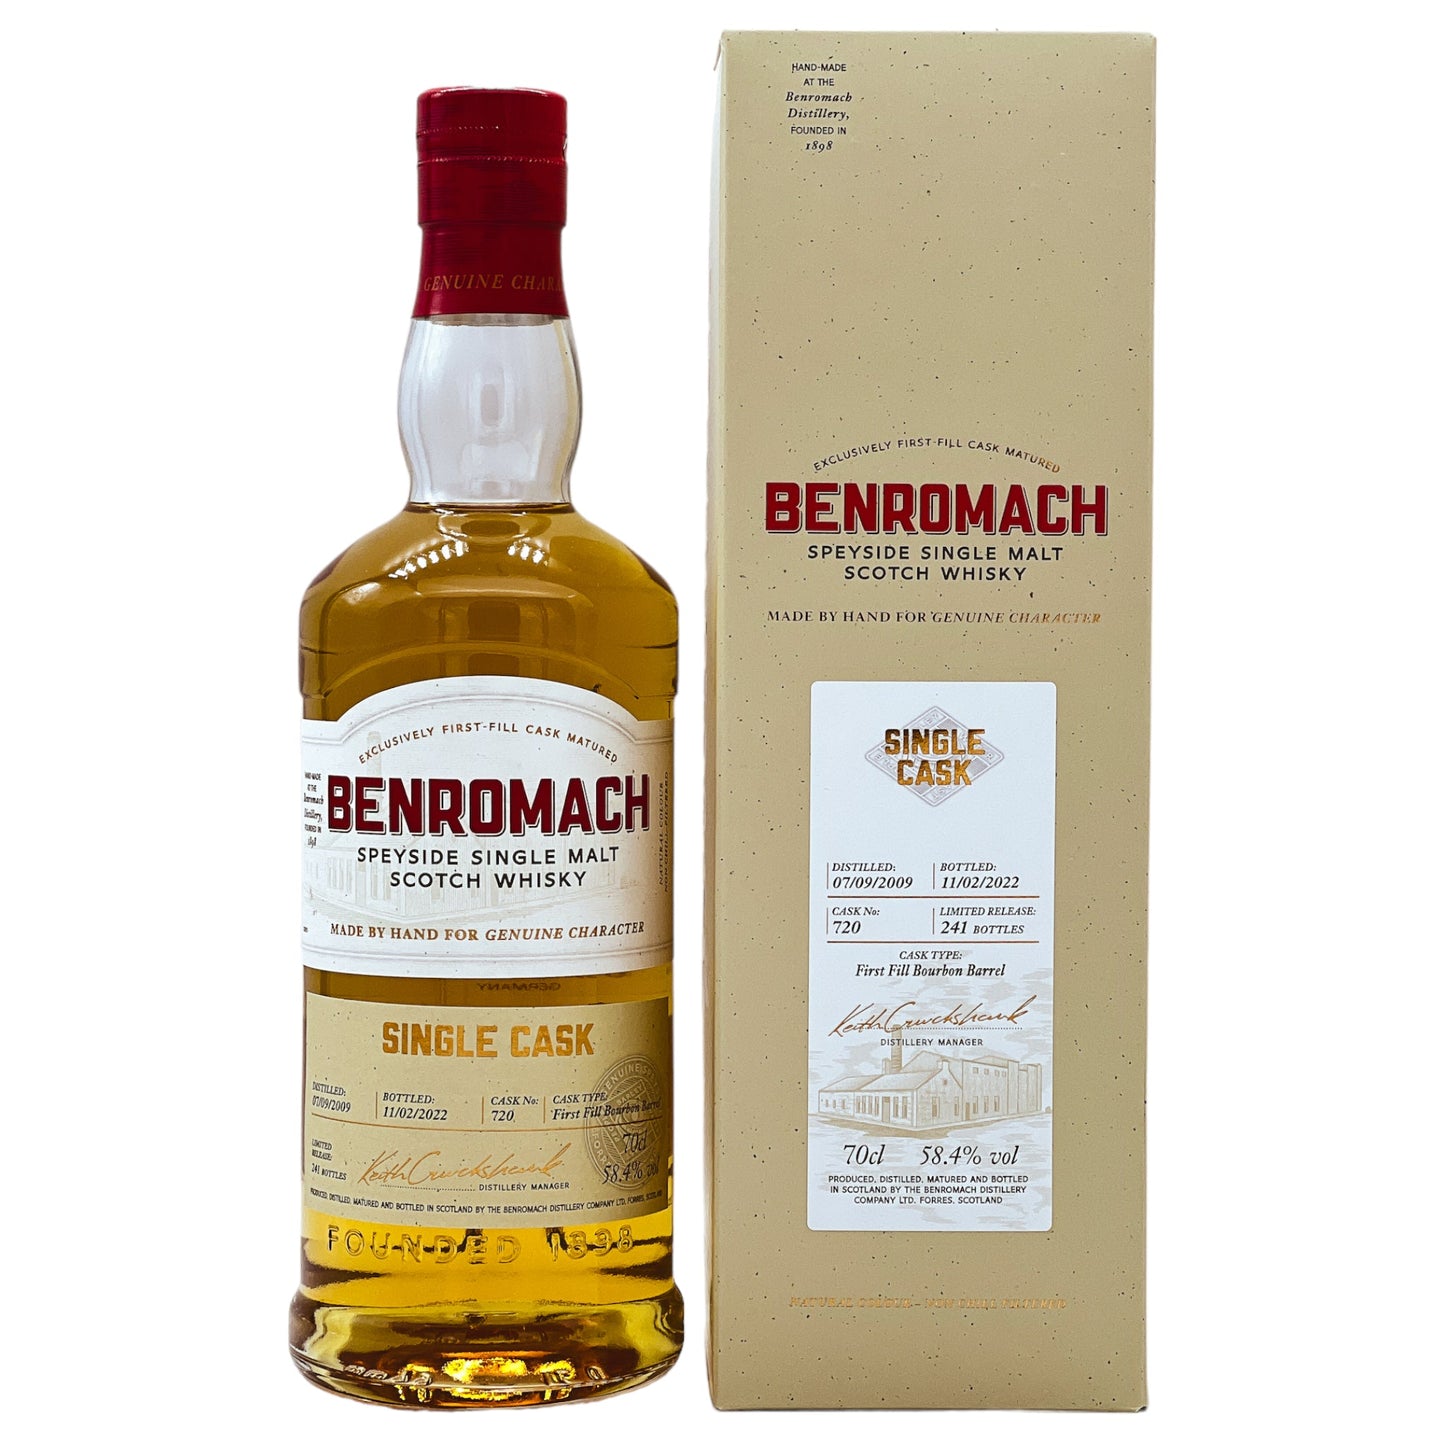 Benromach | Bourbon Barrel Single Cask #720 | 2009/2022 | 58,4%GET A BOTTLE